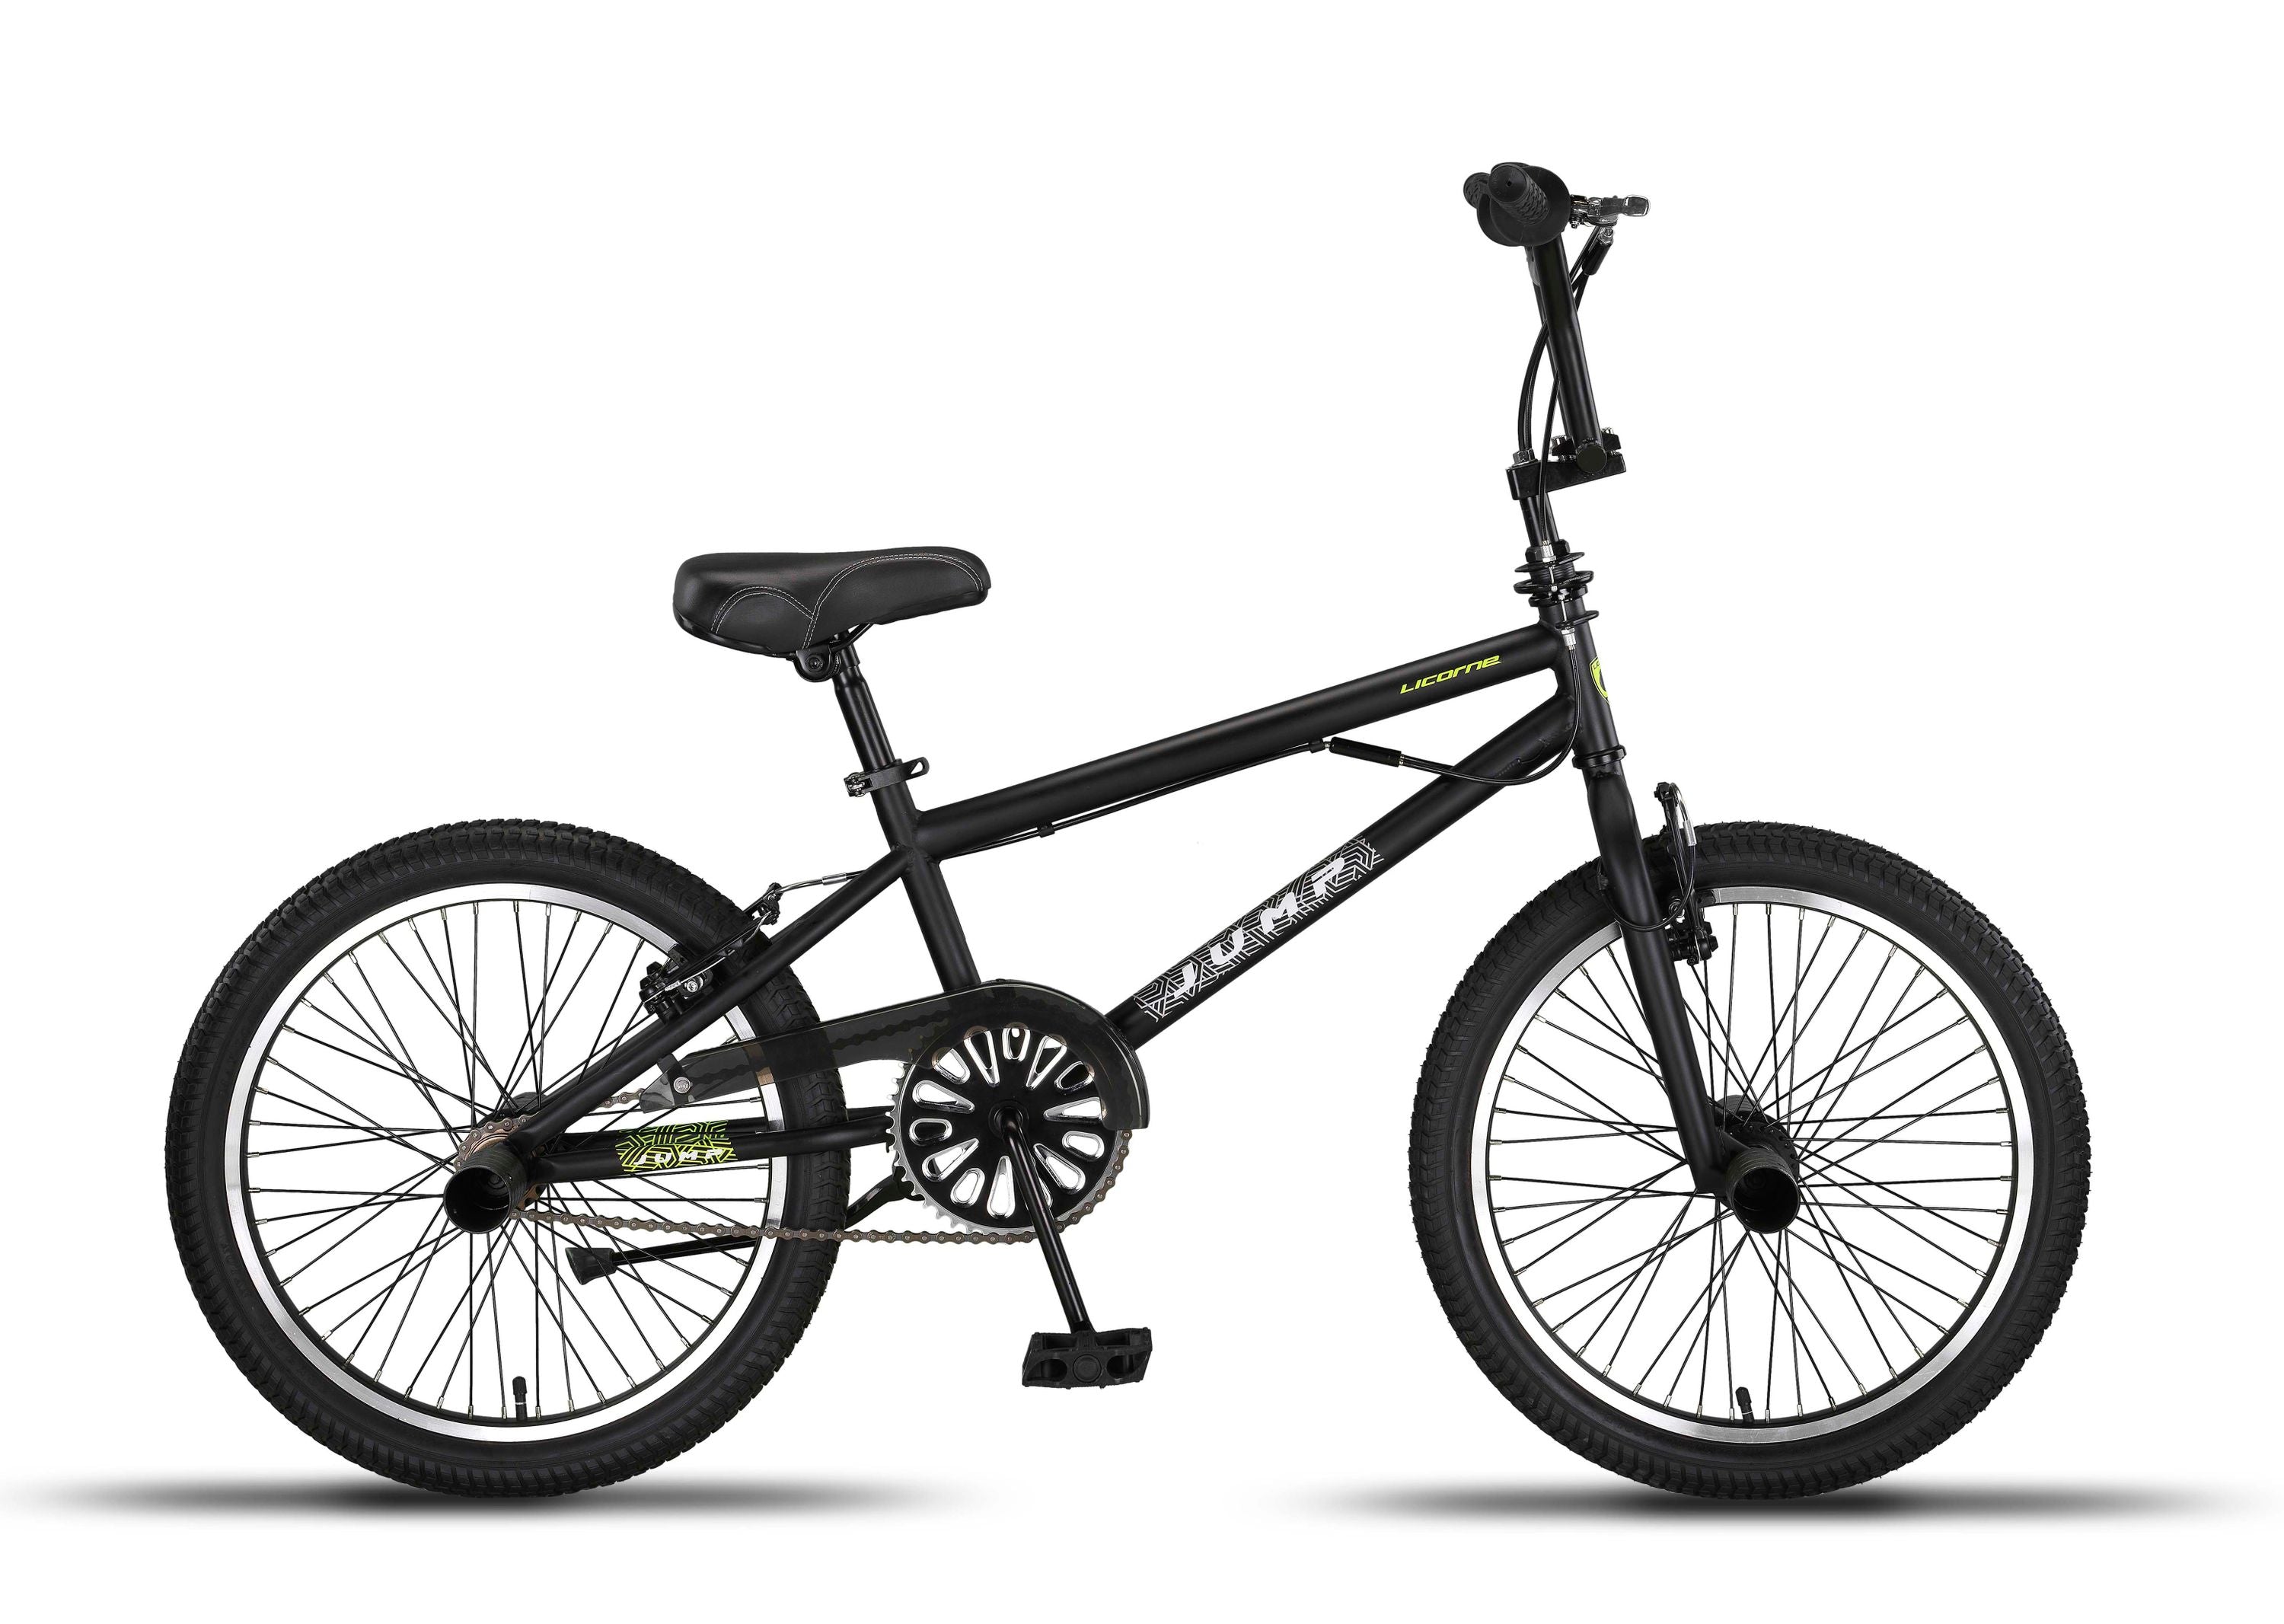 Licorne Bike Jump Premium BMX Sistema a rotore a 360°, 4 pioli in acciaio, paracatena, ruota libera